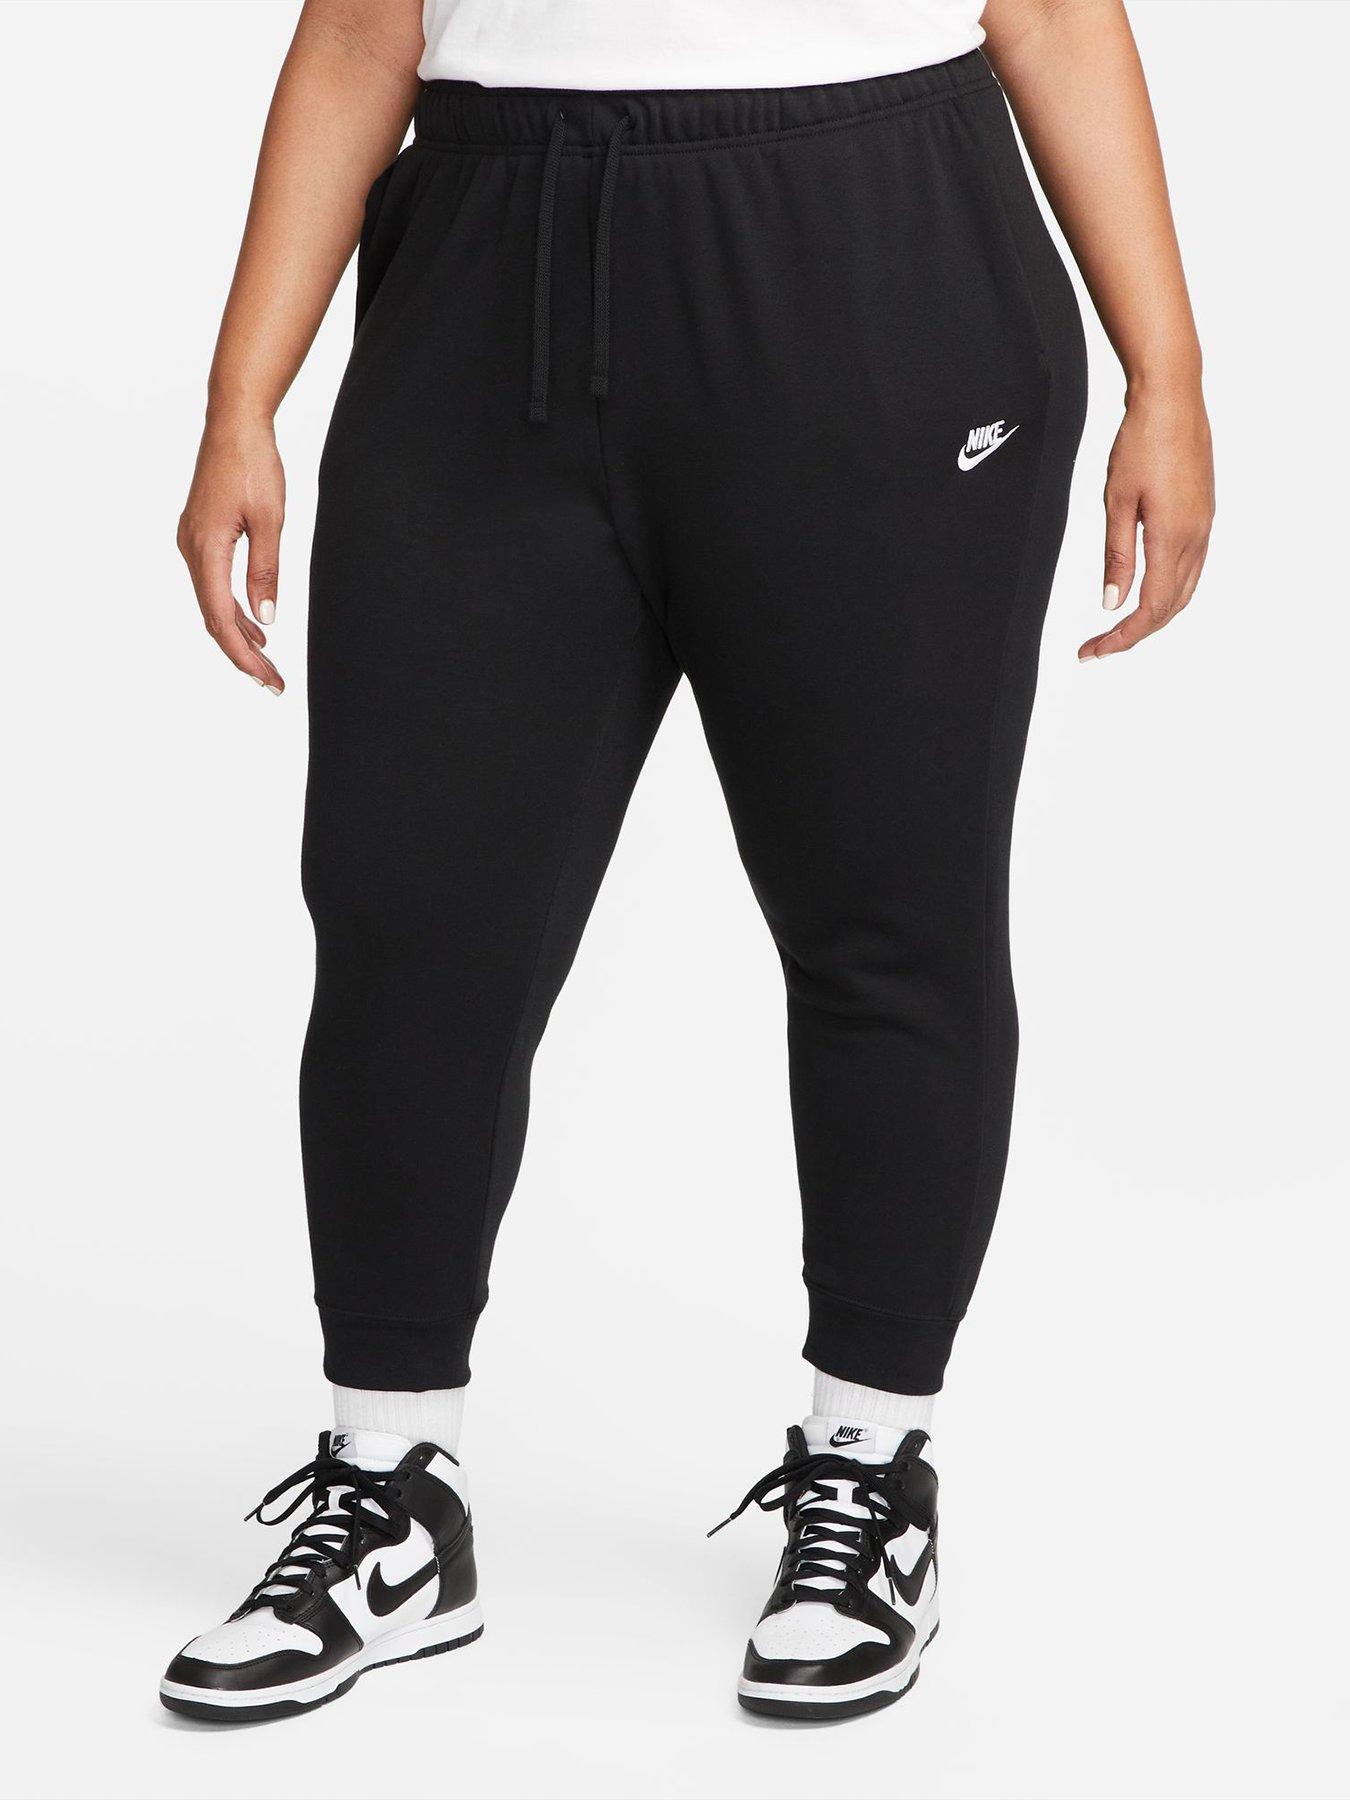 groentje Gouverneur Gevoel van schuld Nike Women's Nsw Curve Club Fleece Mid Rise Standard Joggers - BLACK/WHITE  | very.co.uk